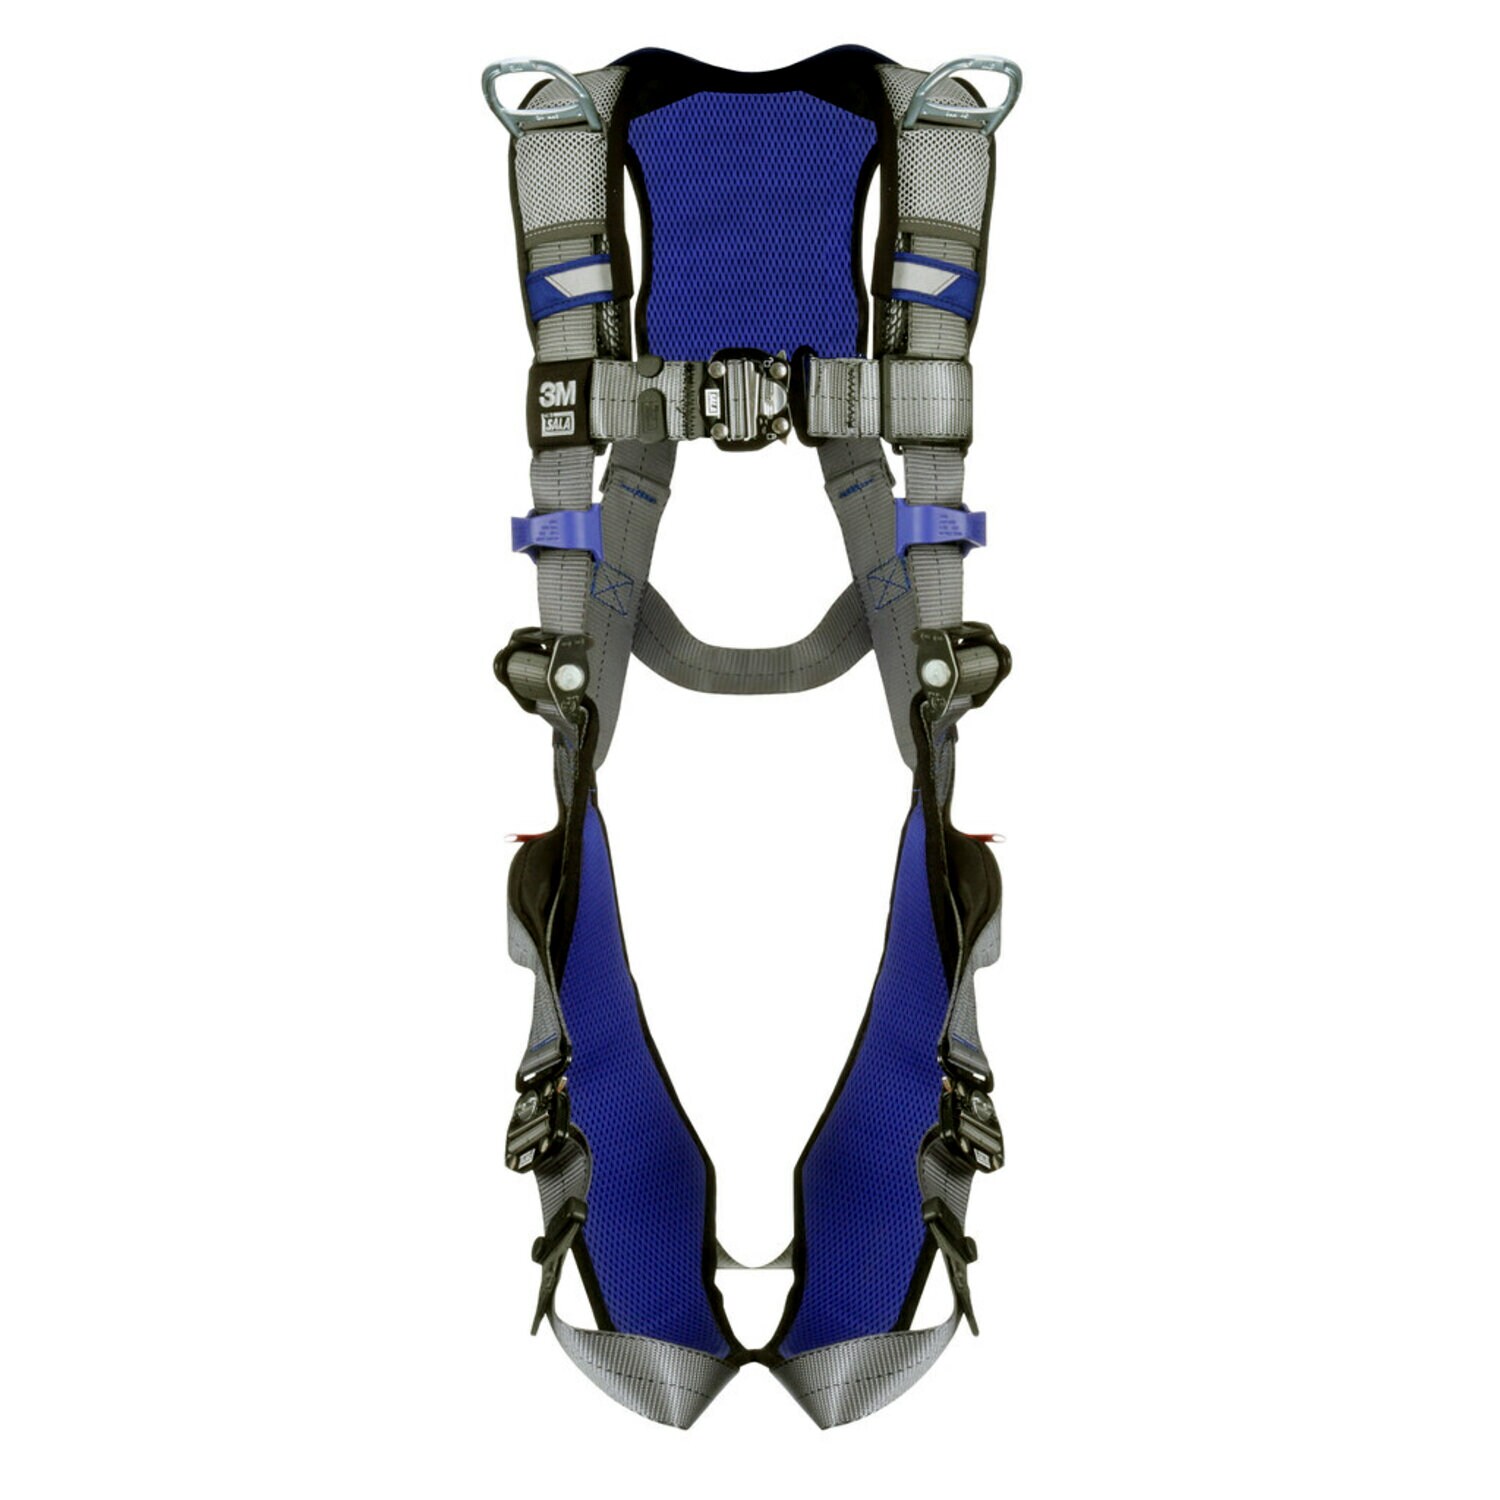 7012817902 - 3M DBI-SALA ExoFit X200 Comfort Vest Retrieval Safety Harness 1402148, X-Large